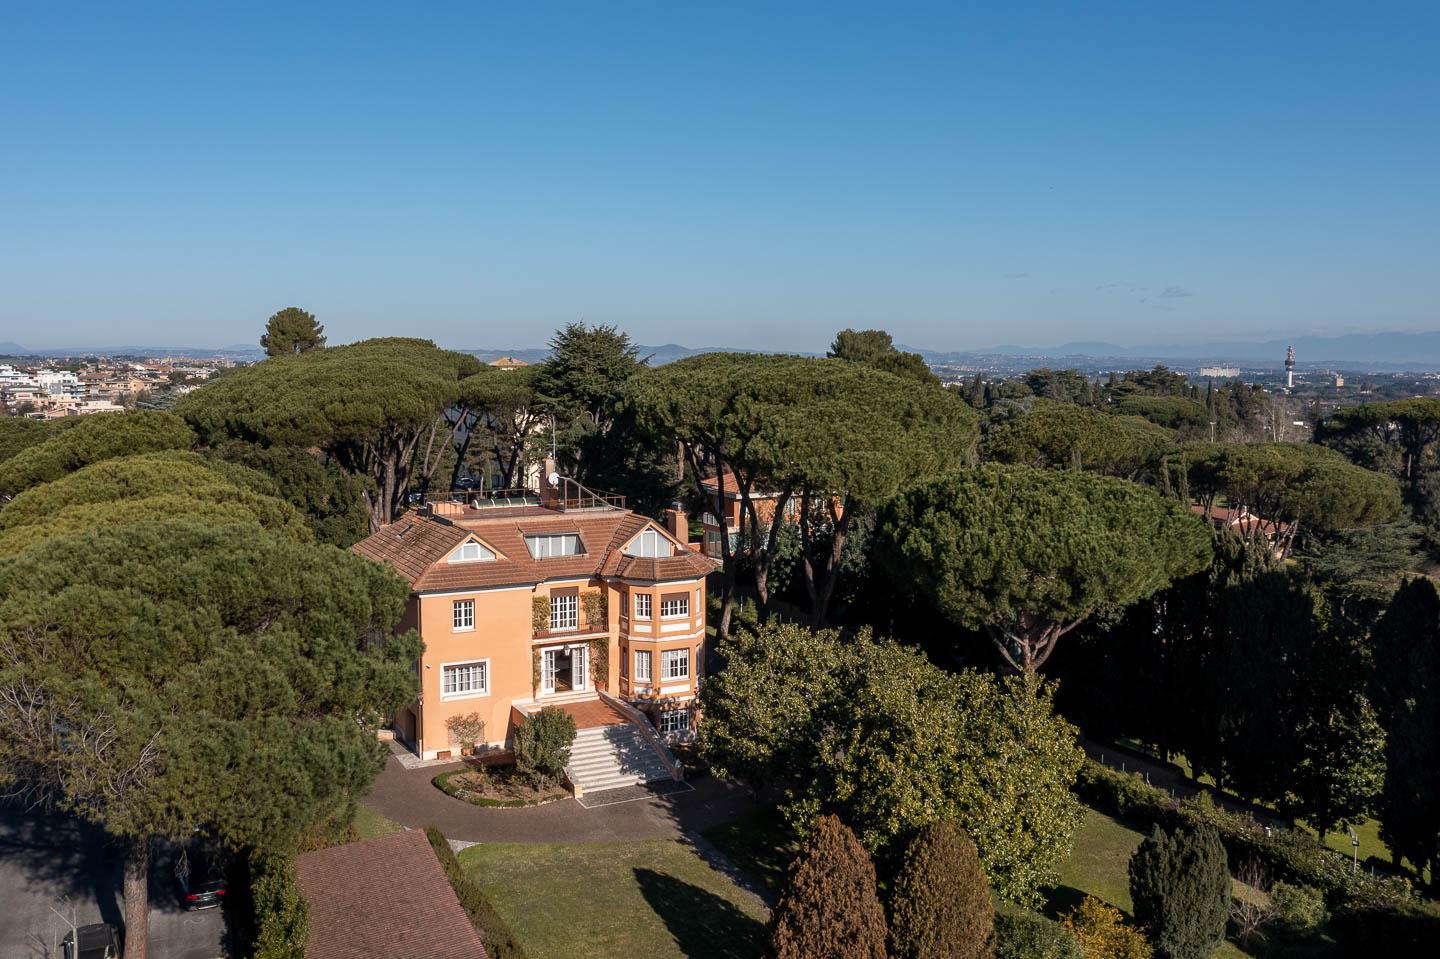 Repleto de estilo e história, a Villa Romana de Aldo Gucci vem à tona